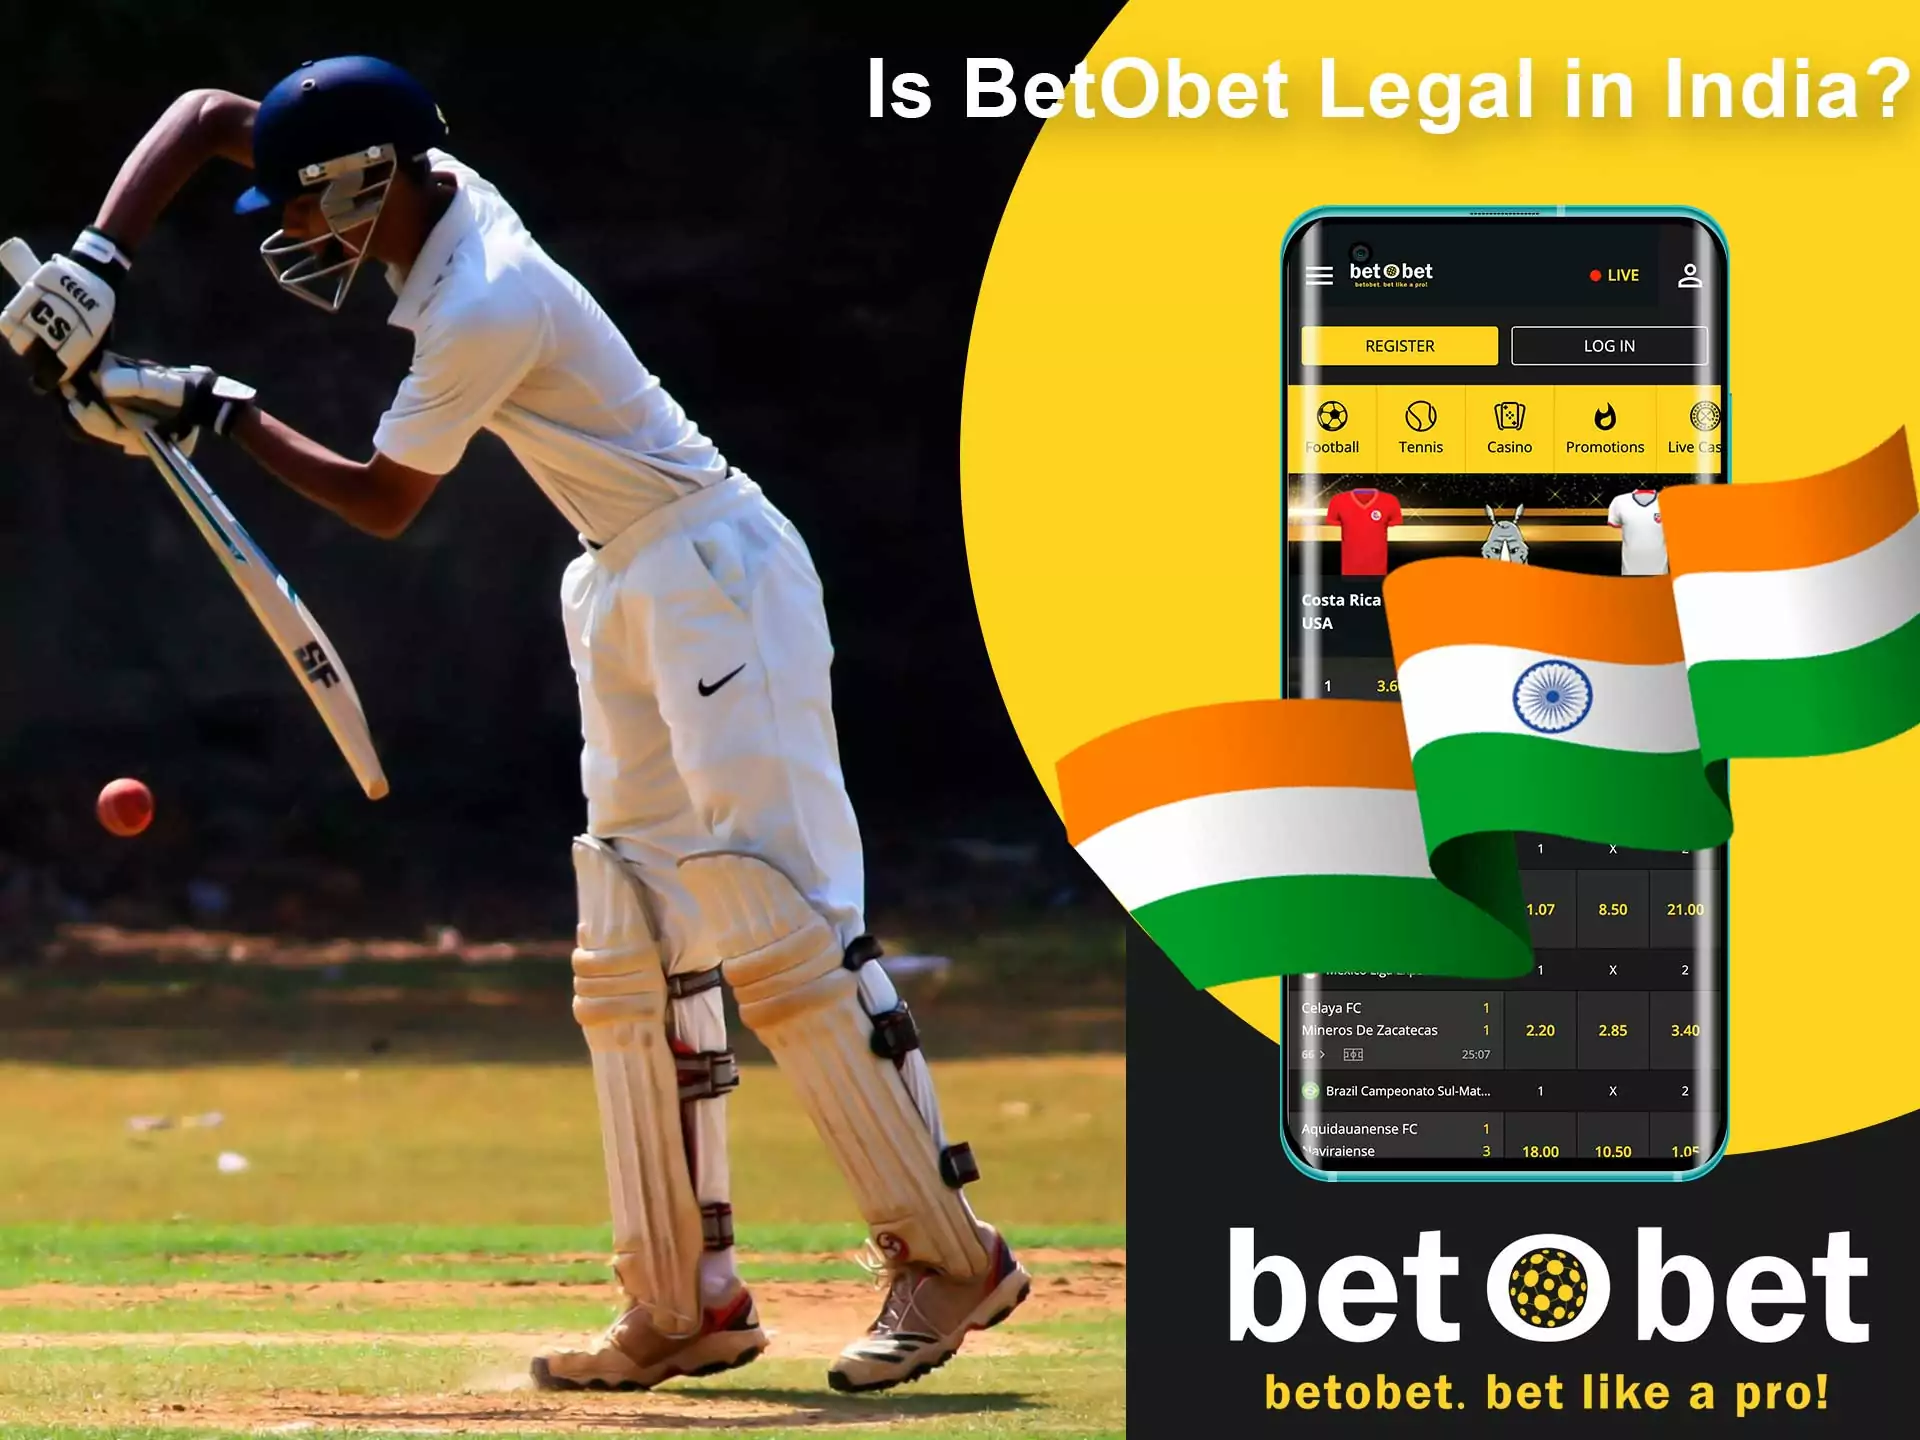 Betobet is legal in India.